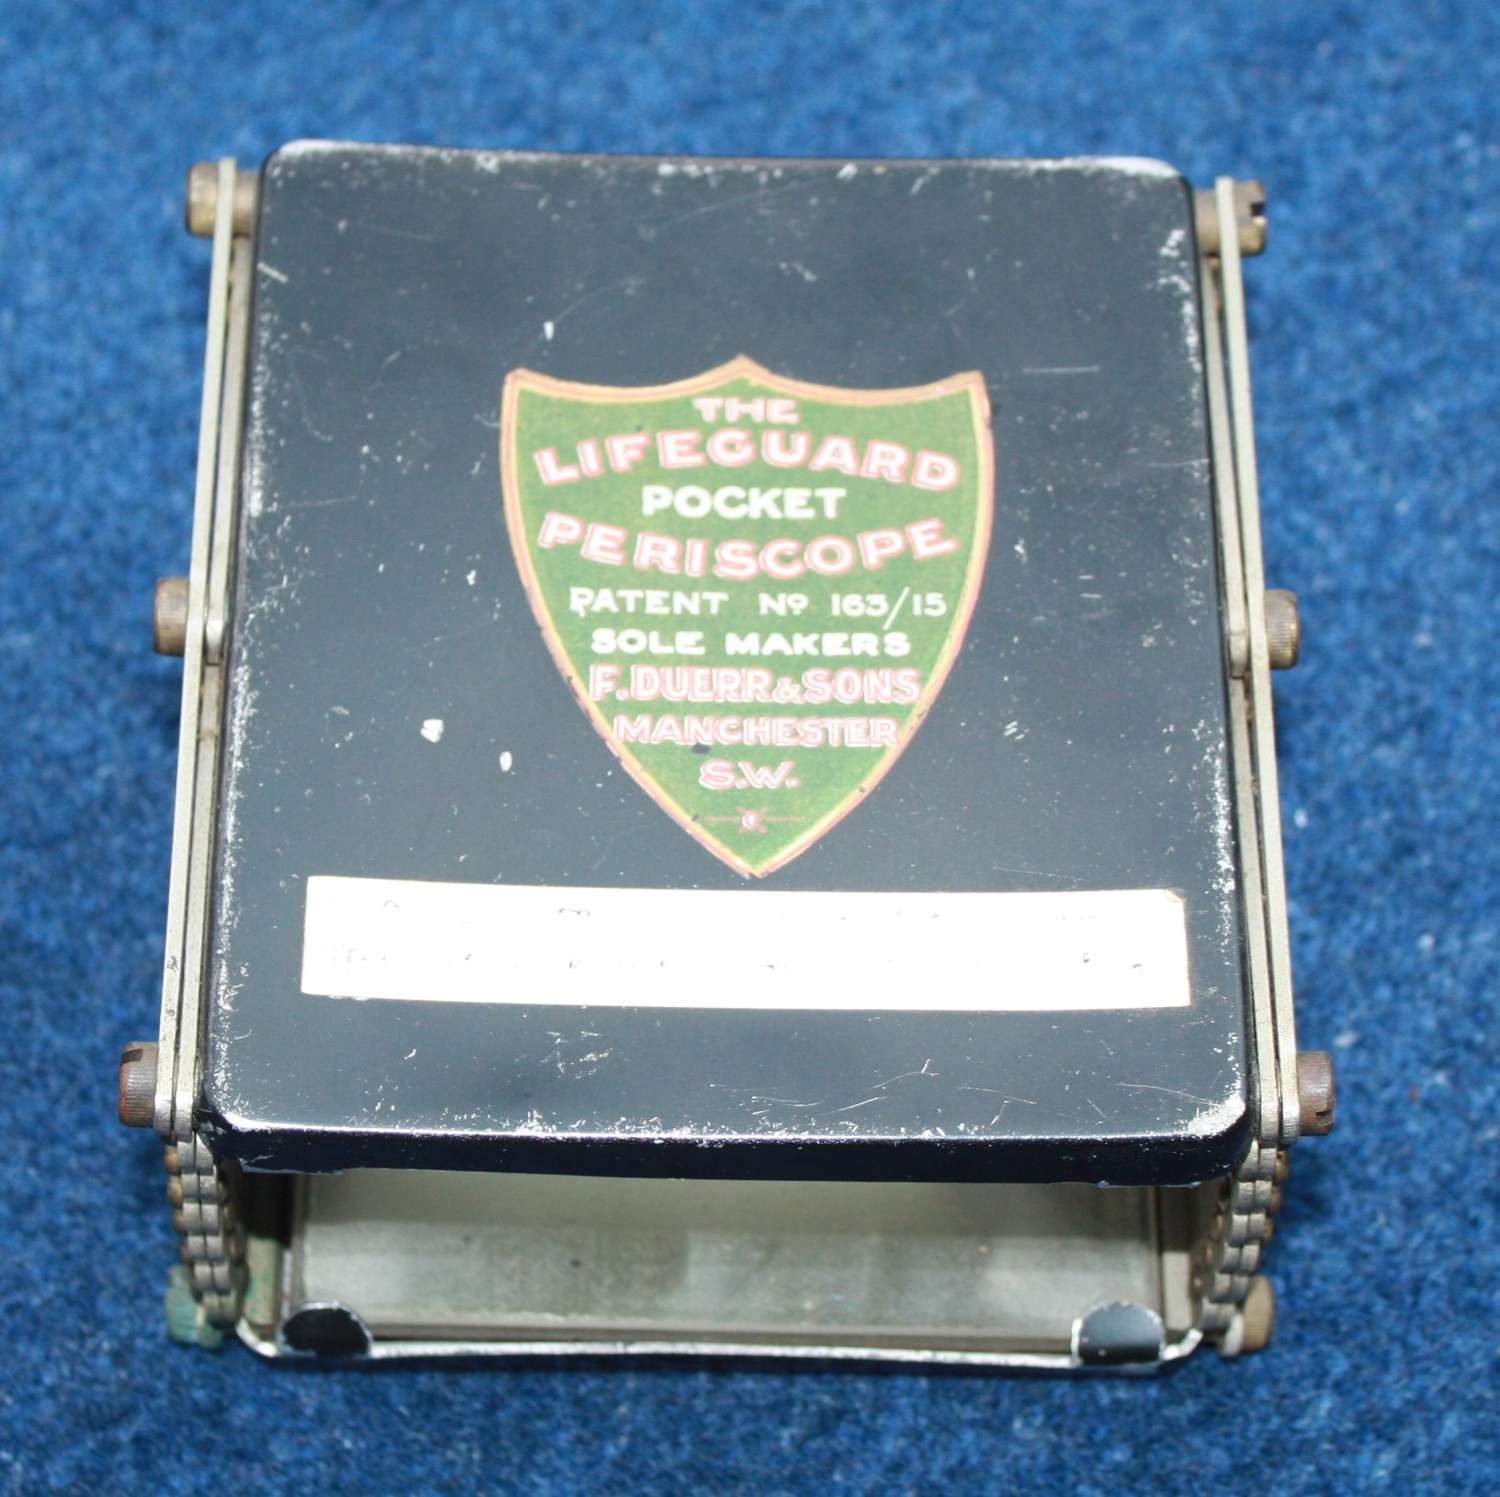 WW1 British Army 'The Lifeguard' Pocket Periscope.